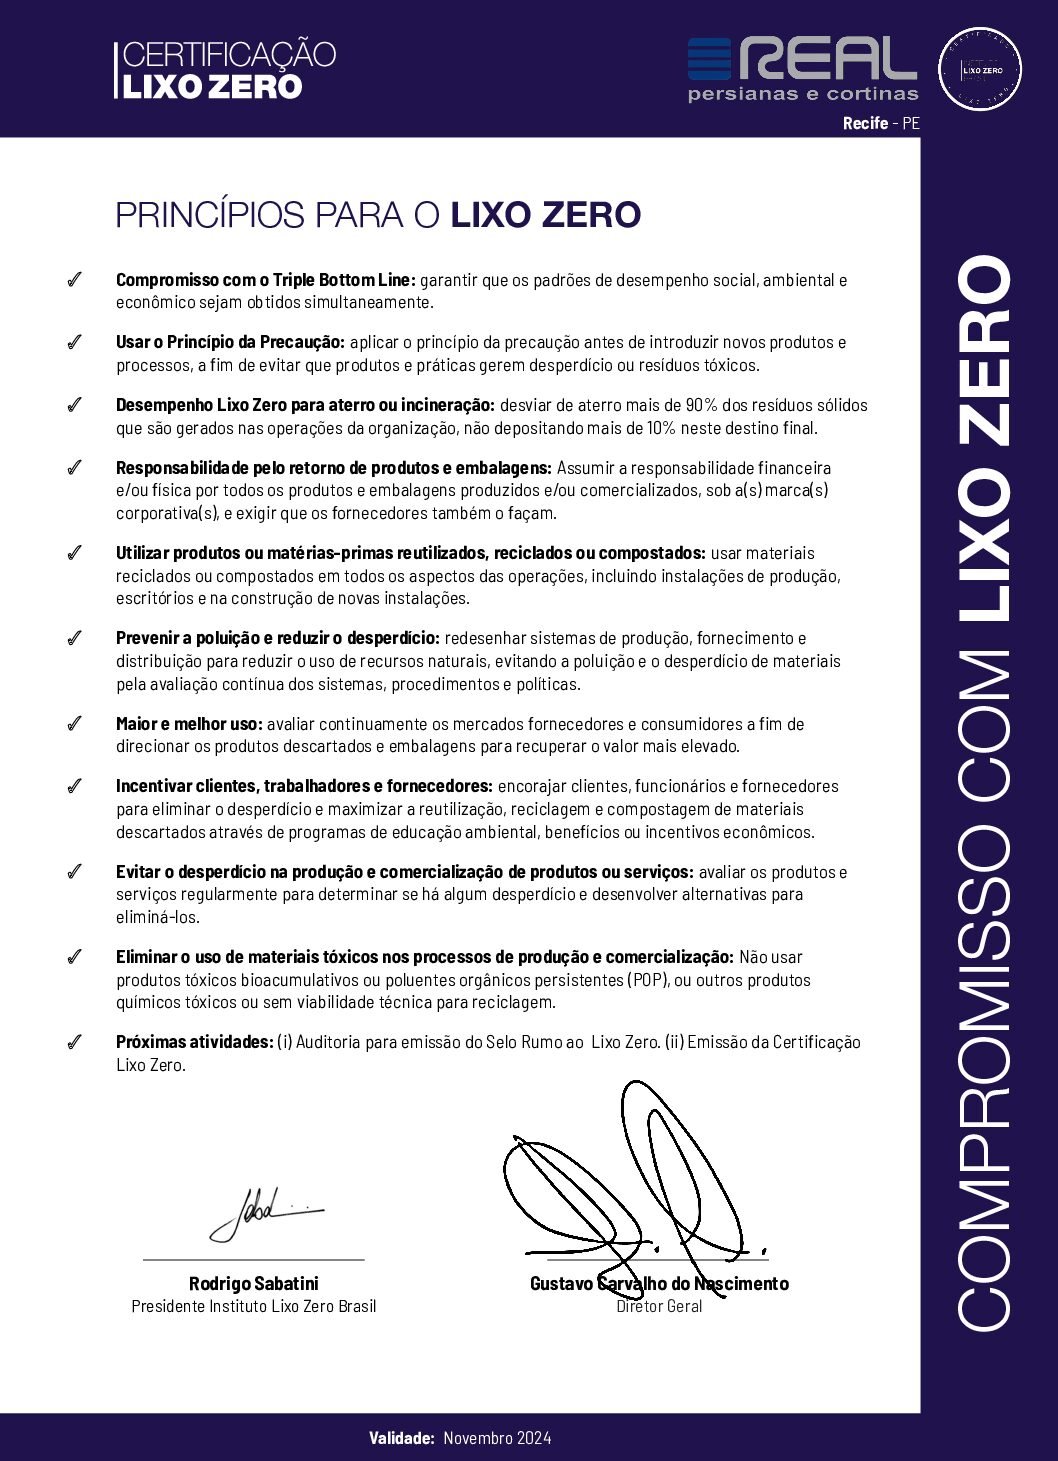 CompromissoLixoZero_Real_Cortinas_PE_Novembro_2023 (1)